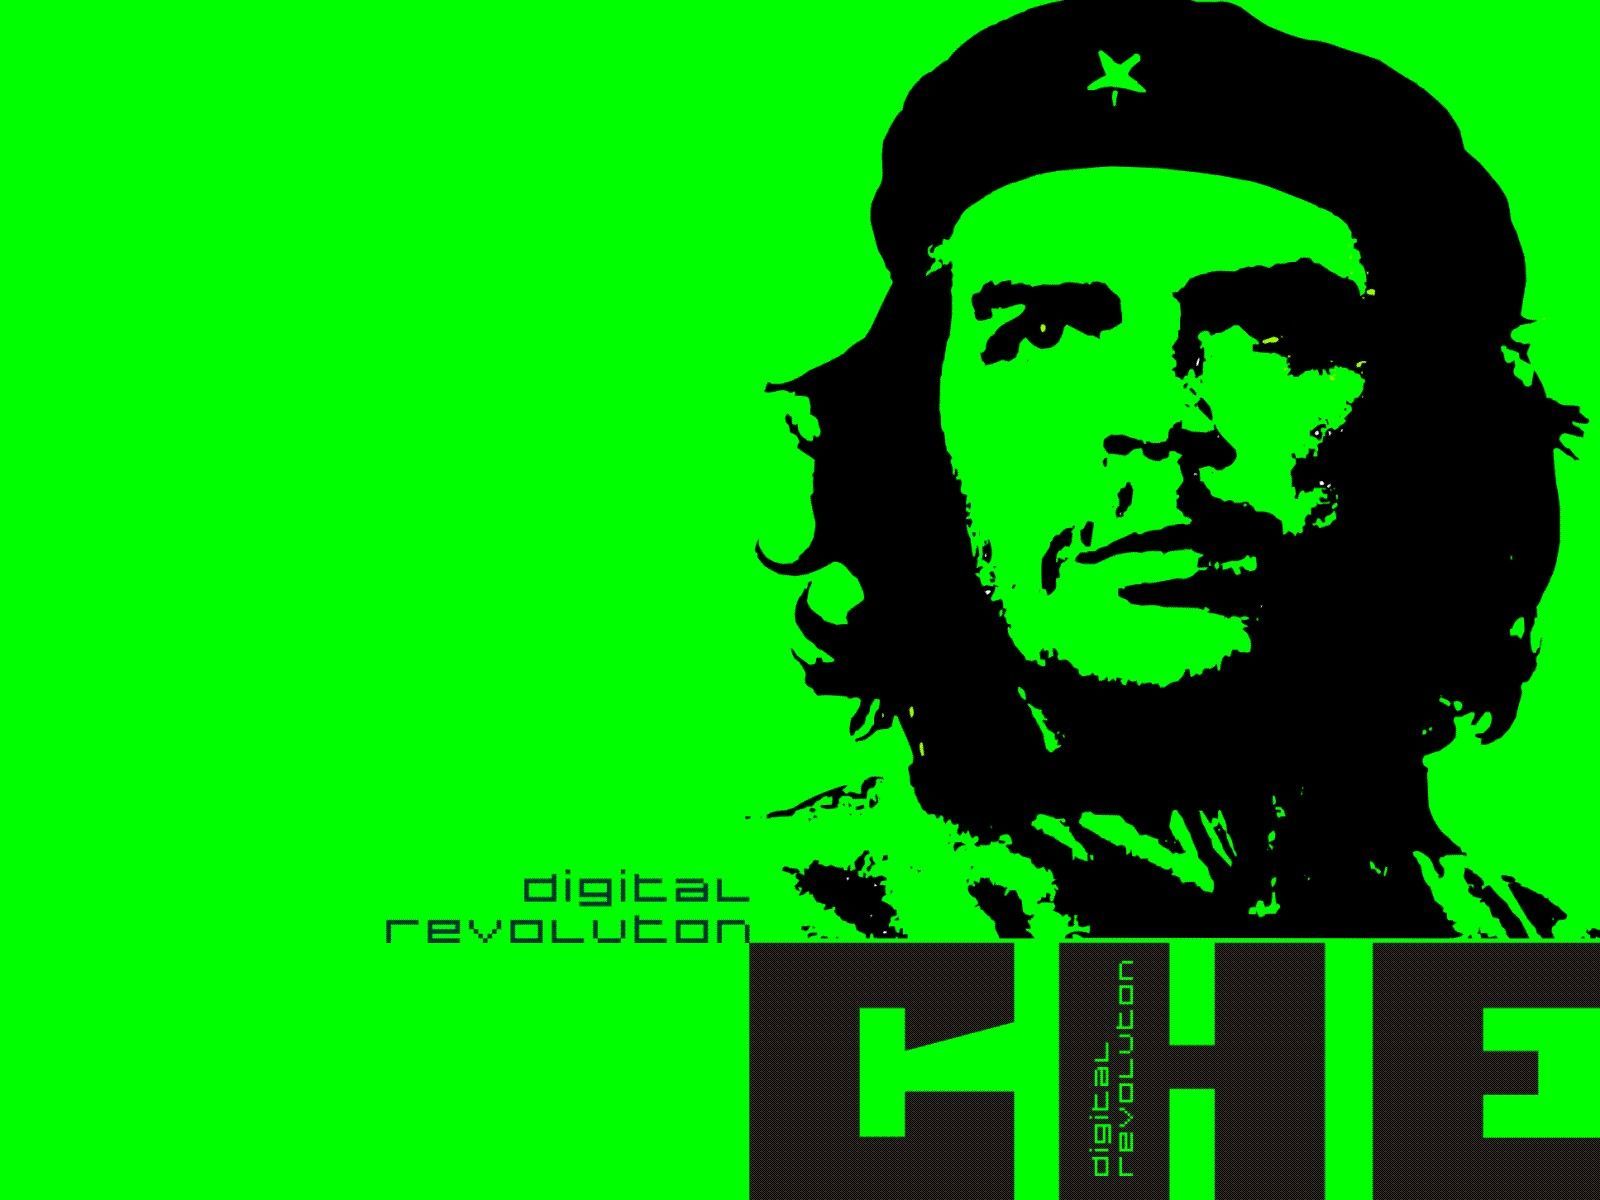 PC wallpaper, Digital revolution :: Che